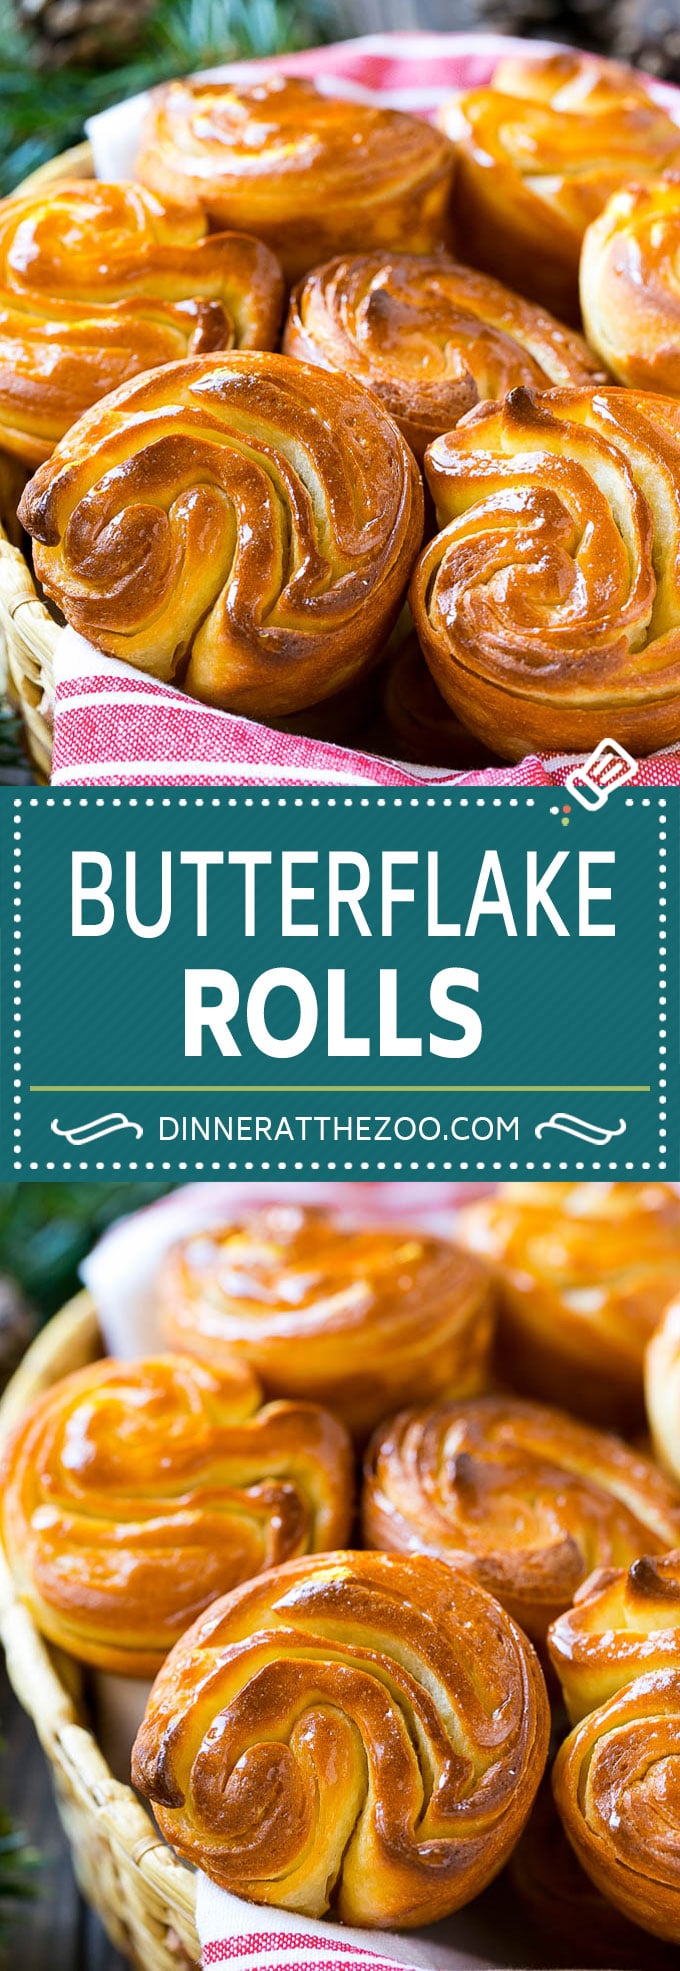 Butterflake Rolls Recipe | Easy Dinner Rolls | Homemade Dinner Rolls | Thanksgiving Rolls #rolls #bread #sidedish #baking #thanksgiving #dinner #dinneratthezoo